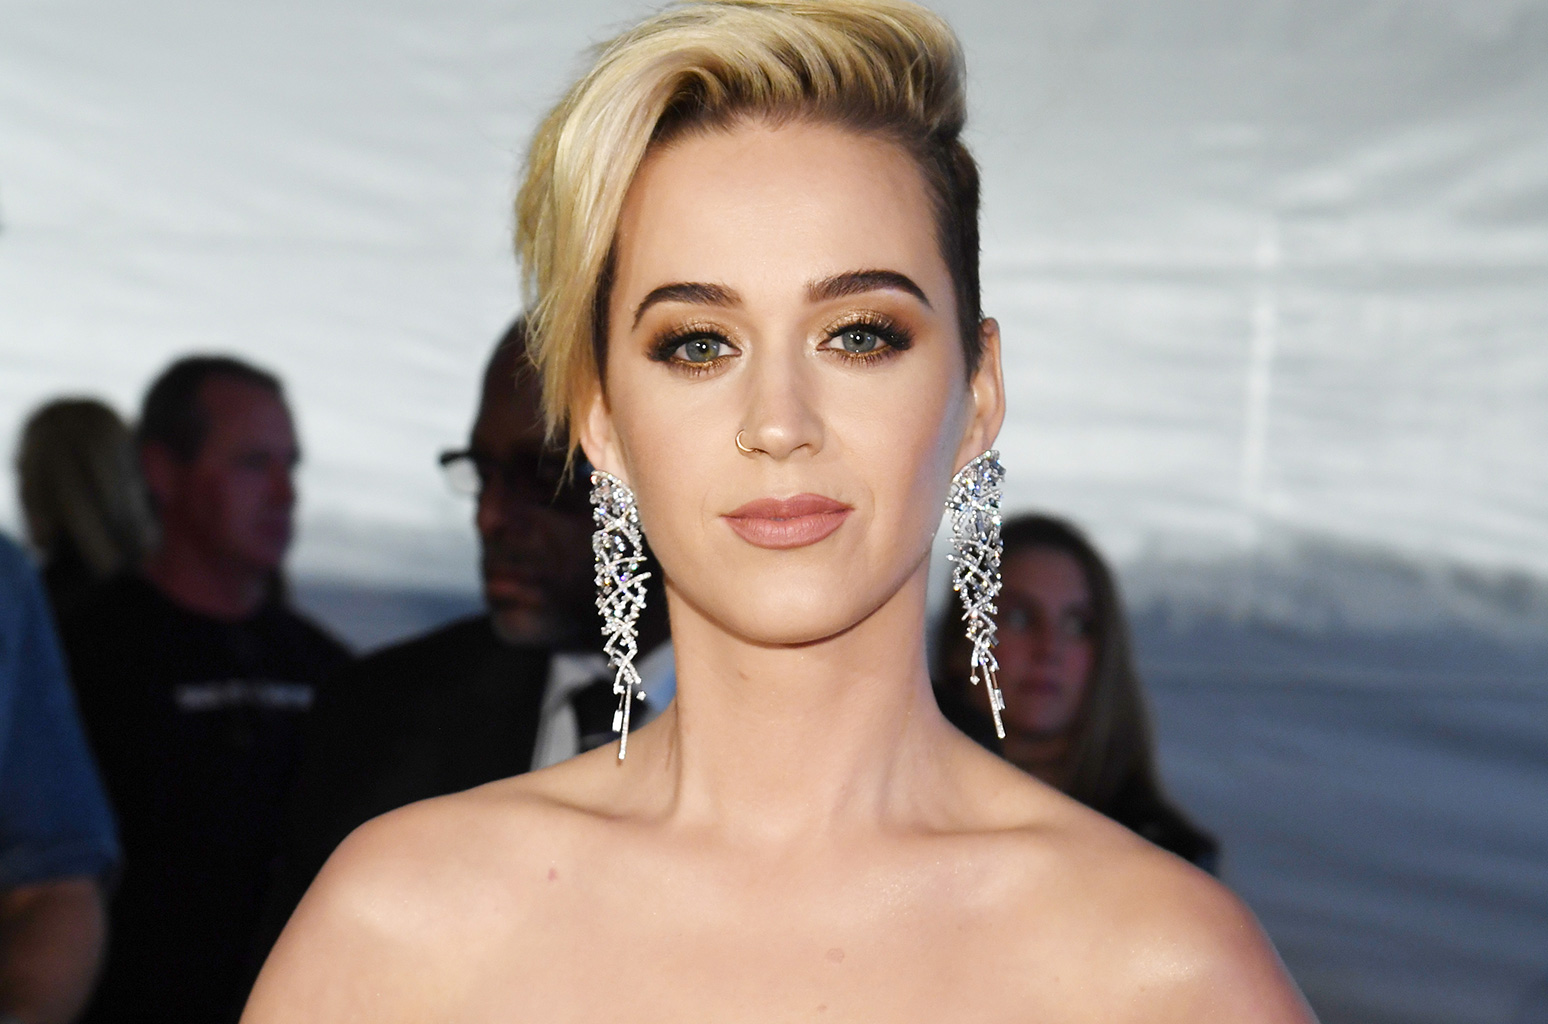 Multiple award-winning singer, Katy Perry